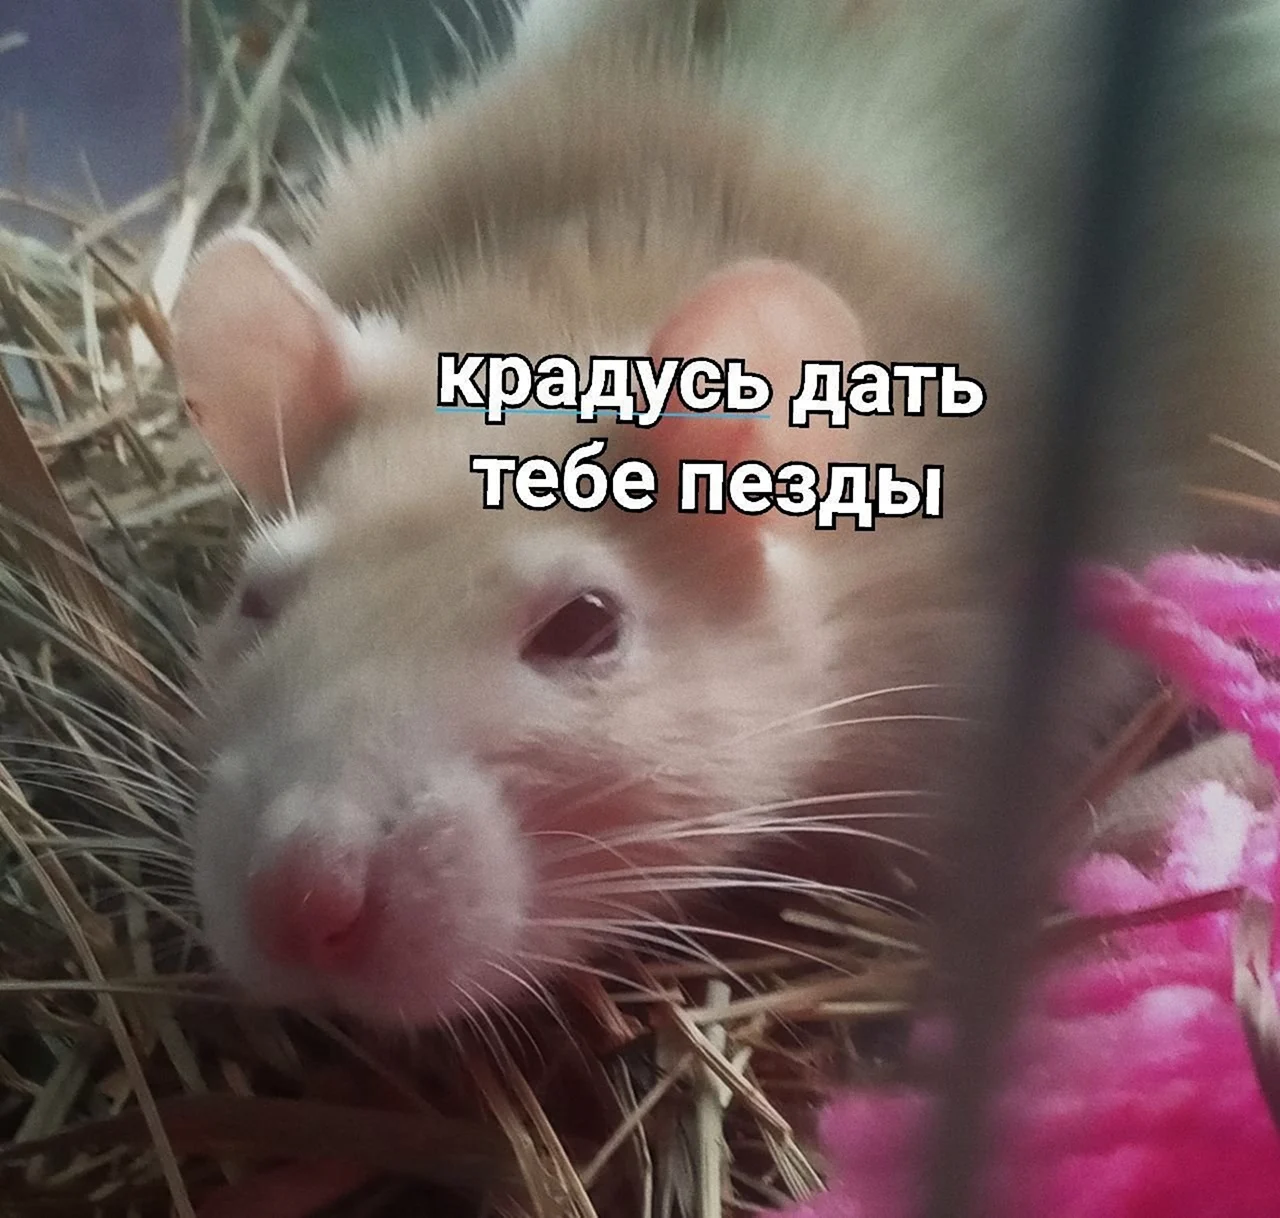 Мемы с крысами